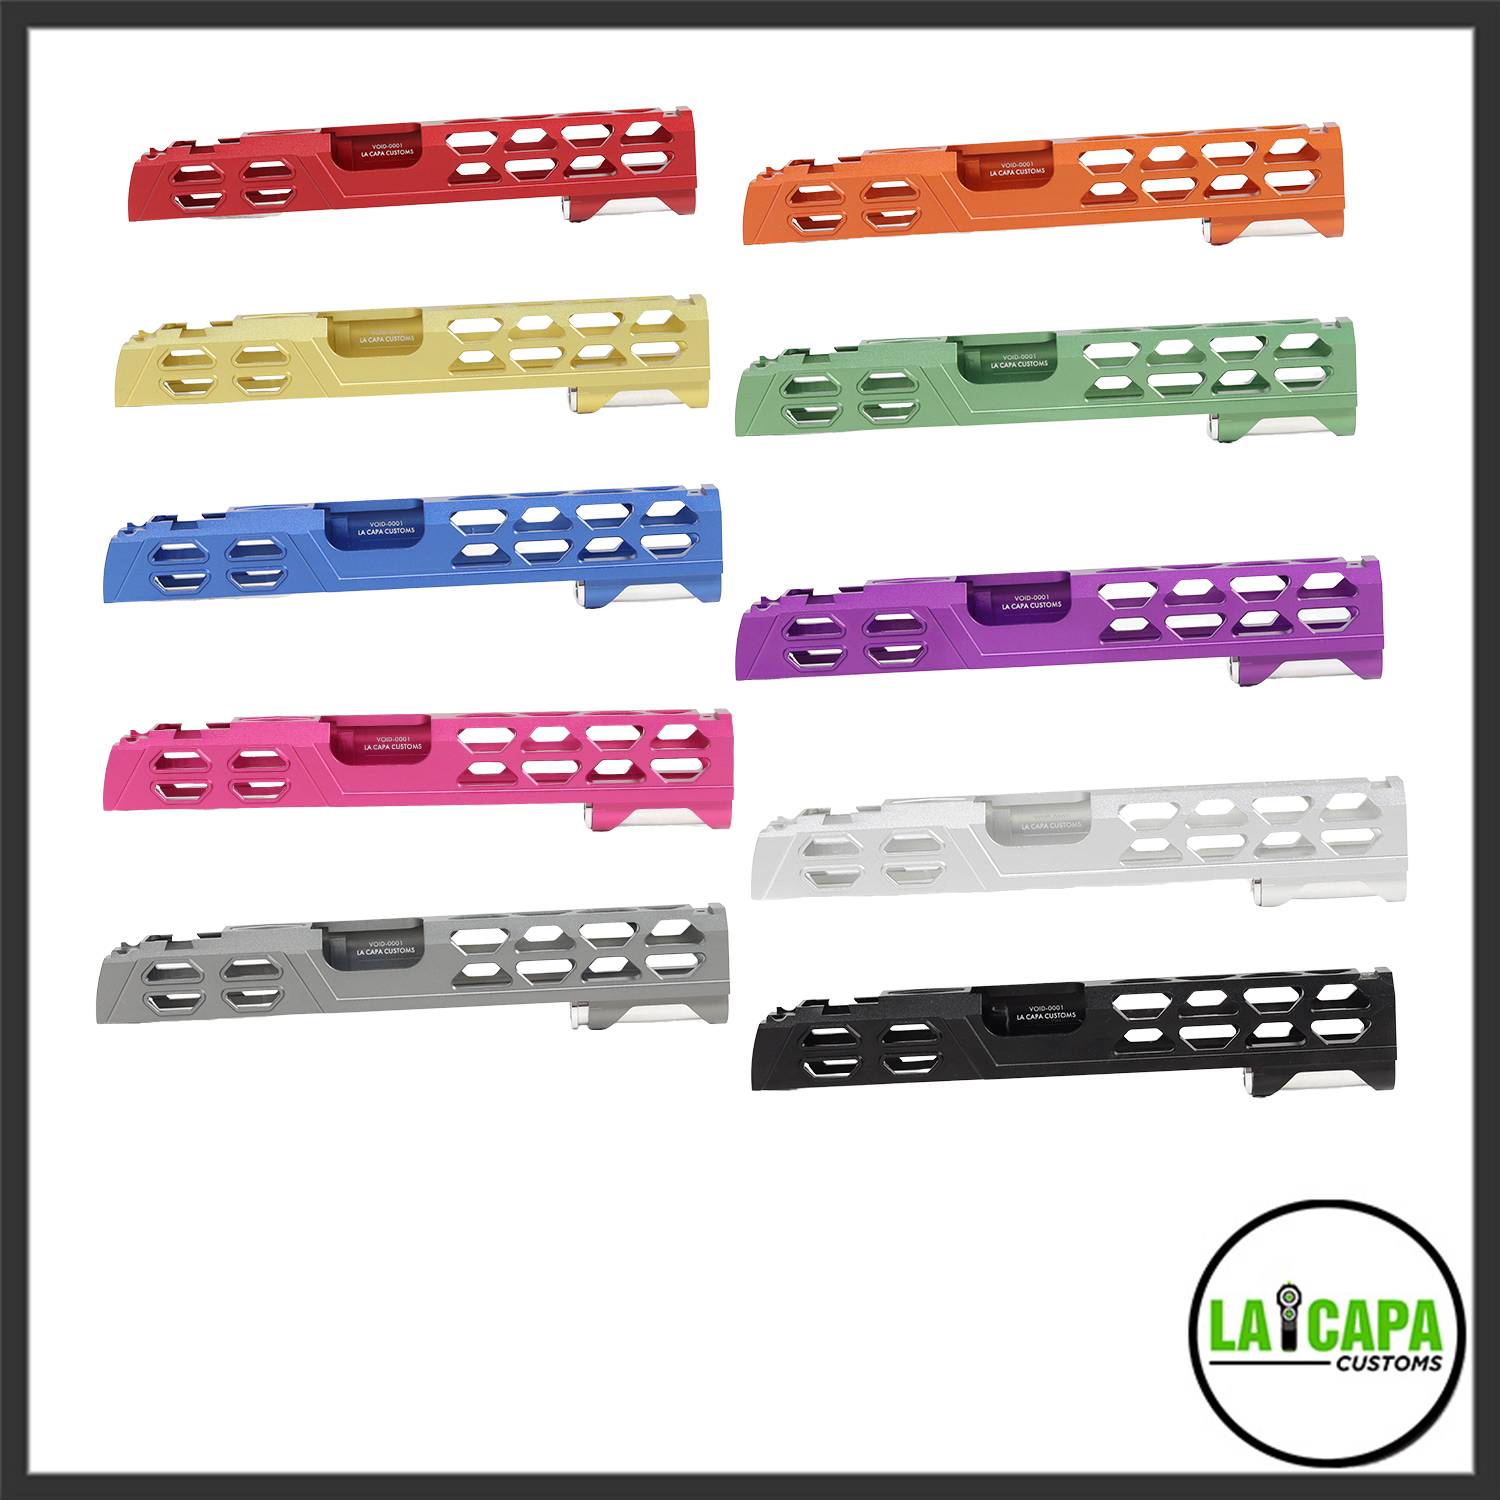 LA Capa Customs 5.1 “VOID” Aluminum Slide

- Green